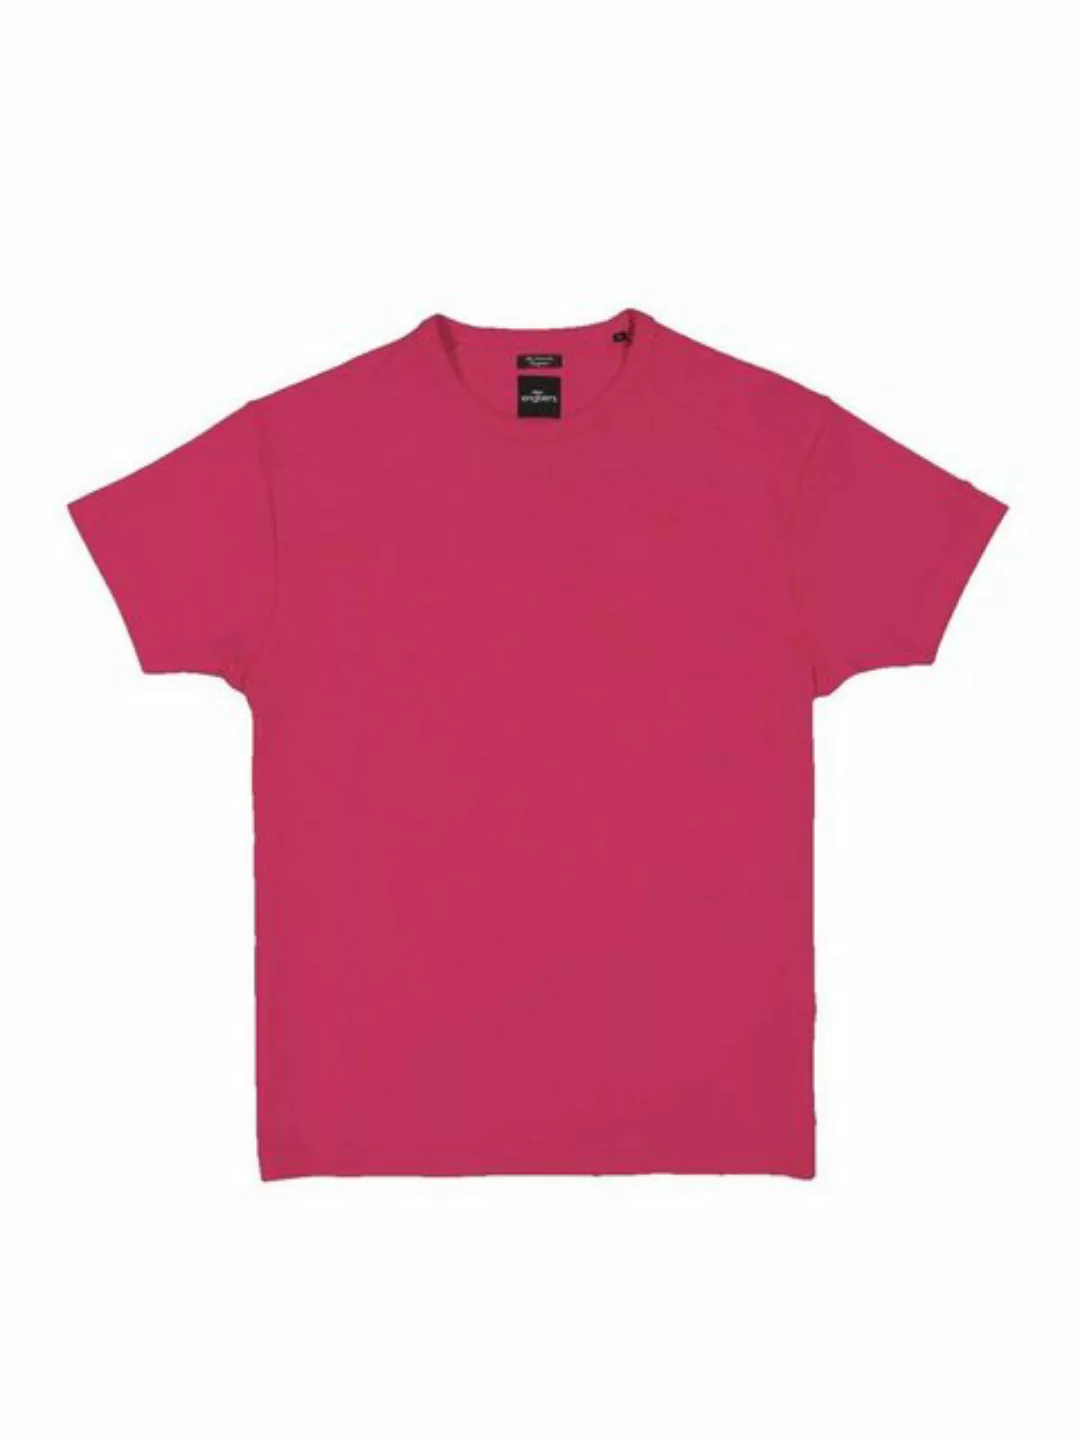 Engbers T-Shirt Basic-Shirt "My Favorite" organic günstig online kaufen